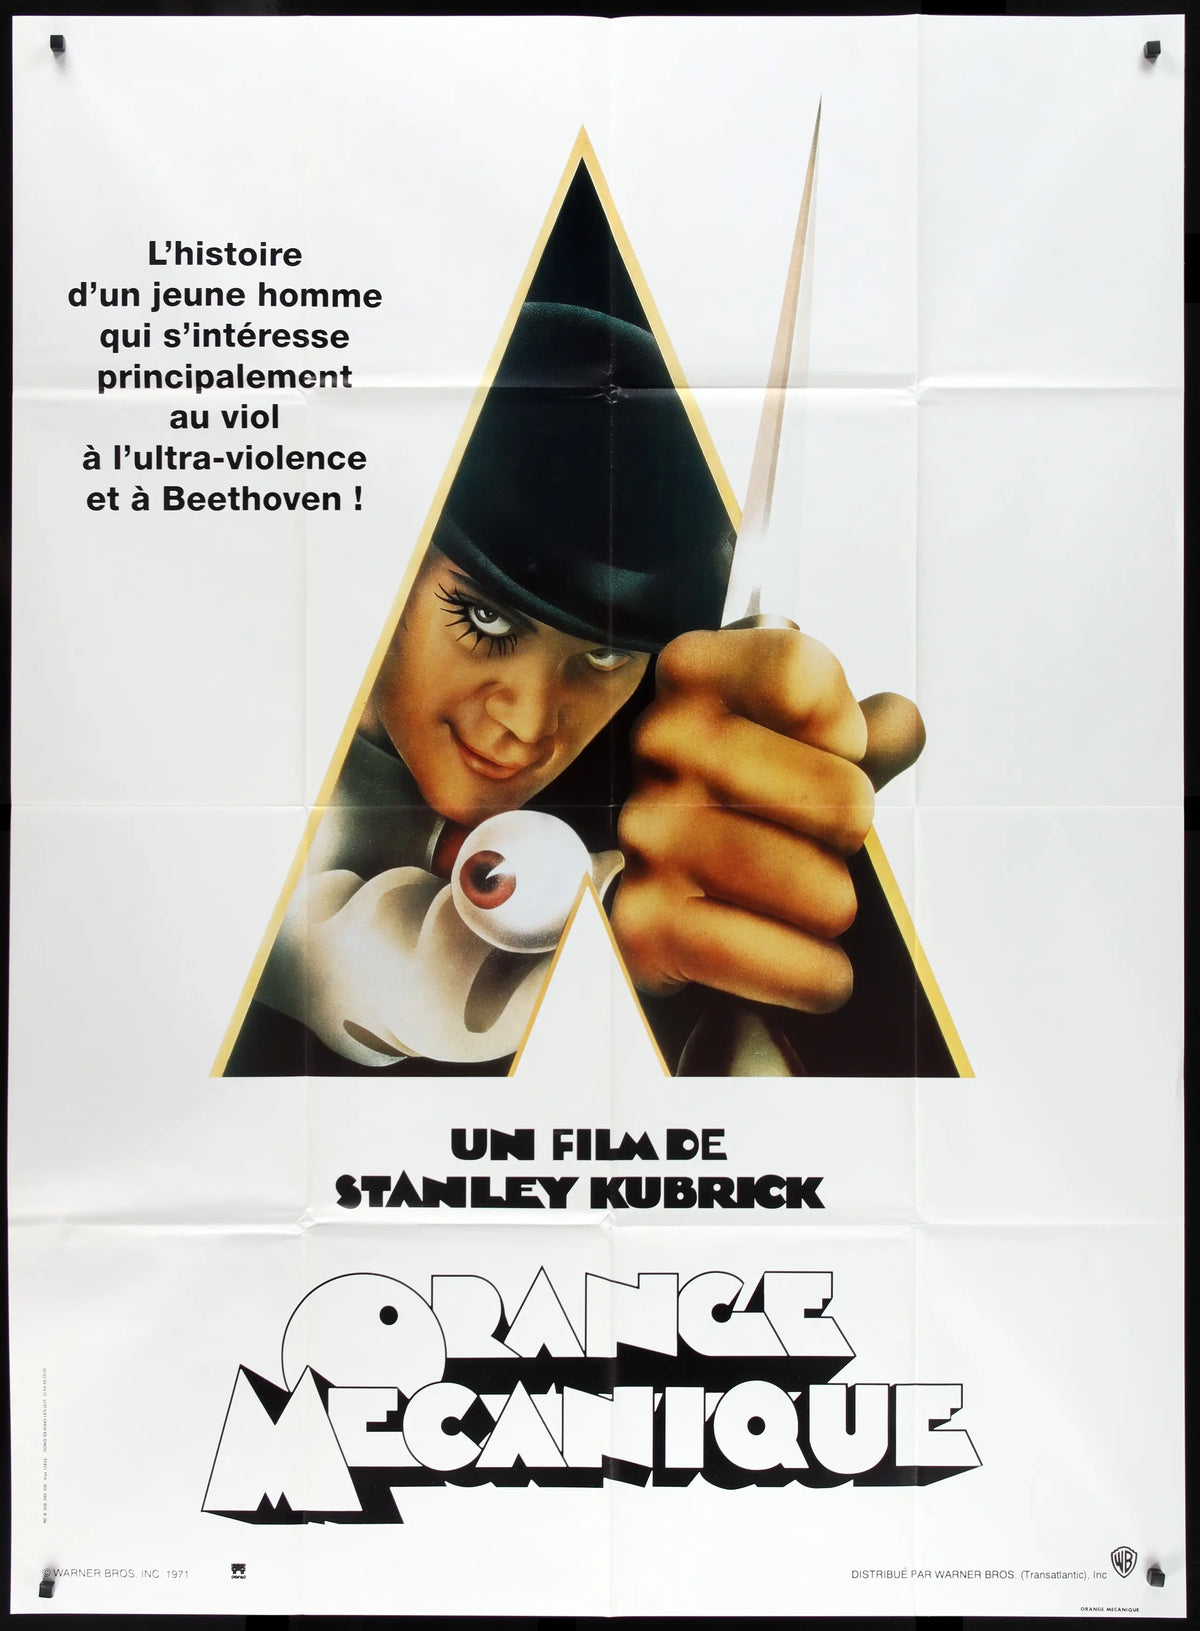 Clockwork Orange (1972) original movie poster for sale at Original Film Art